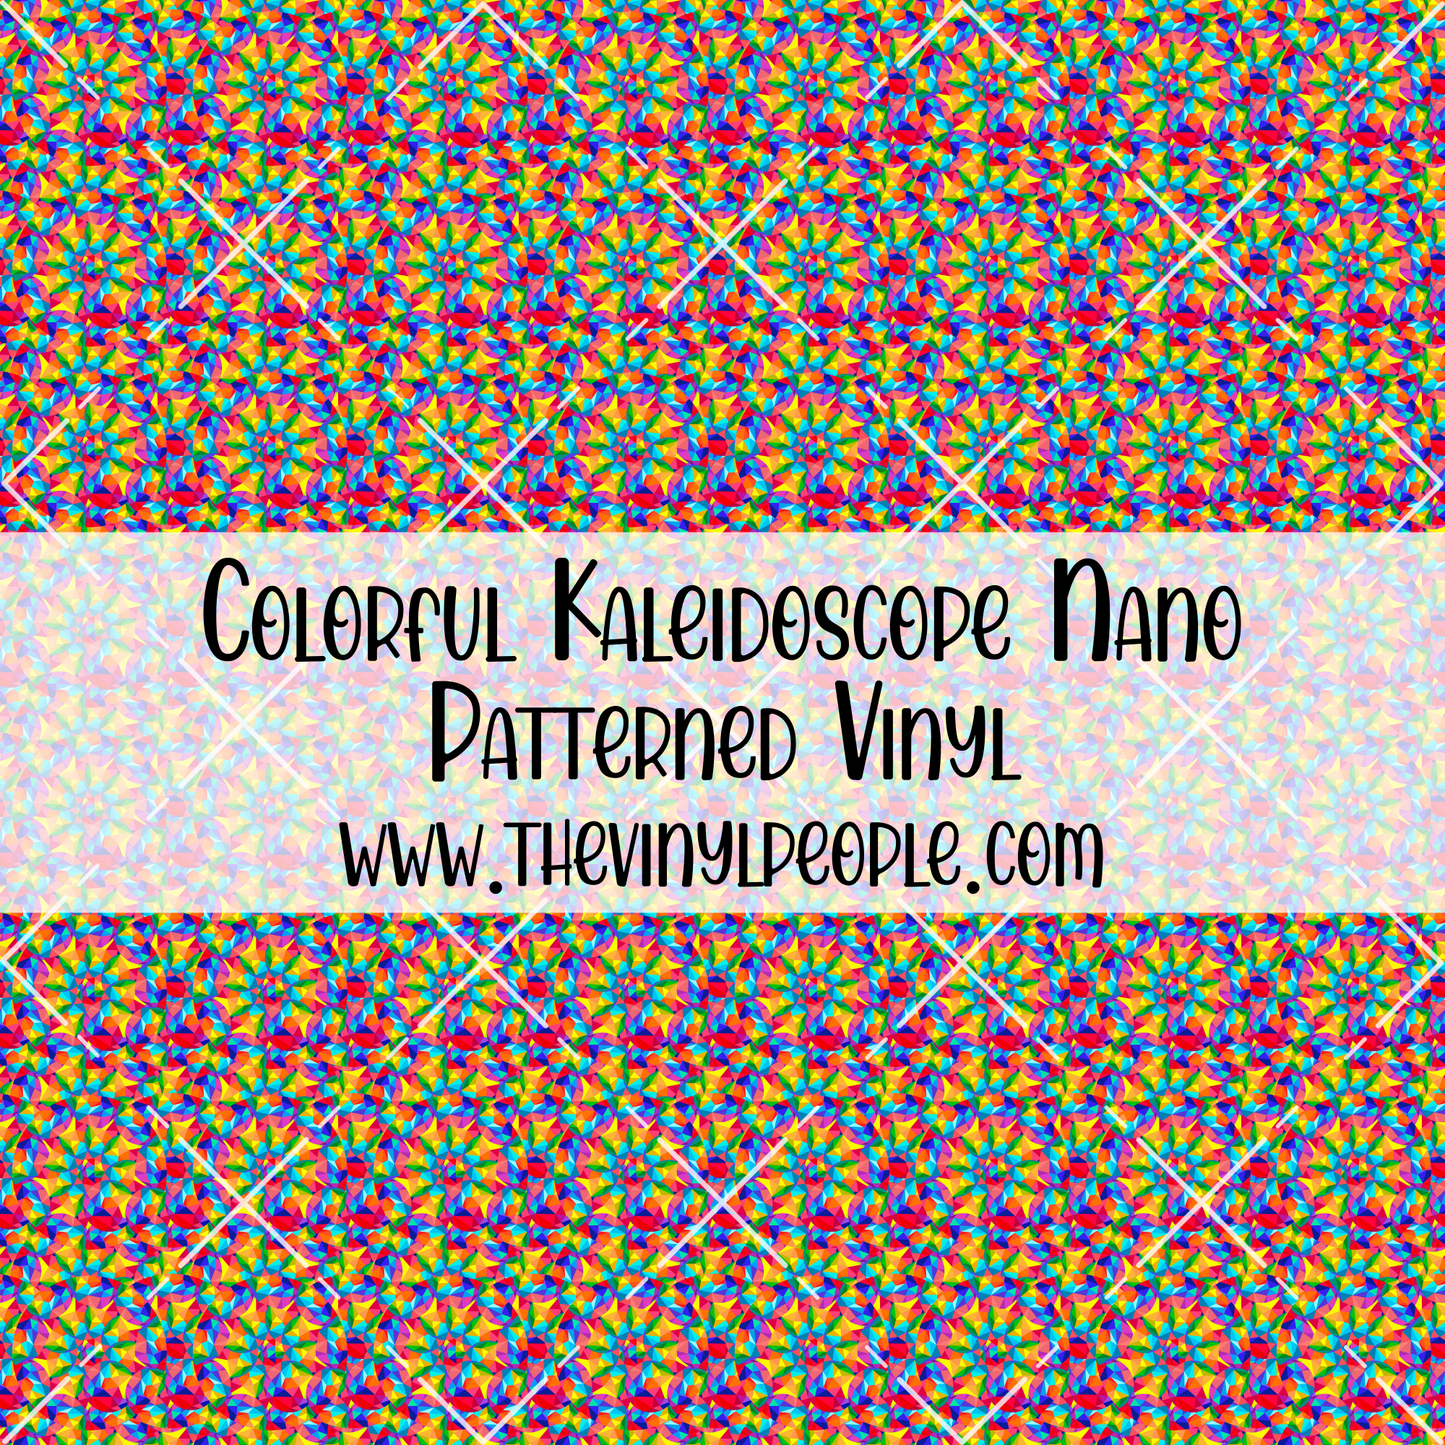 Colorful Kaleidoscope Patterned Vinyl